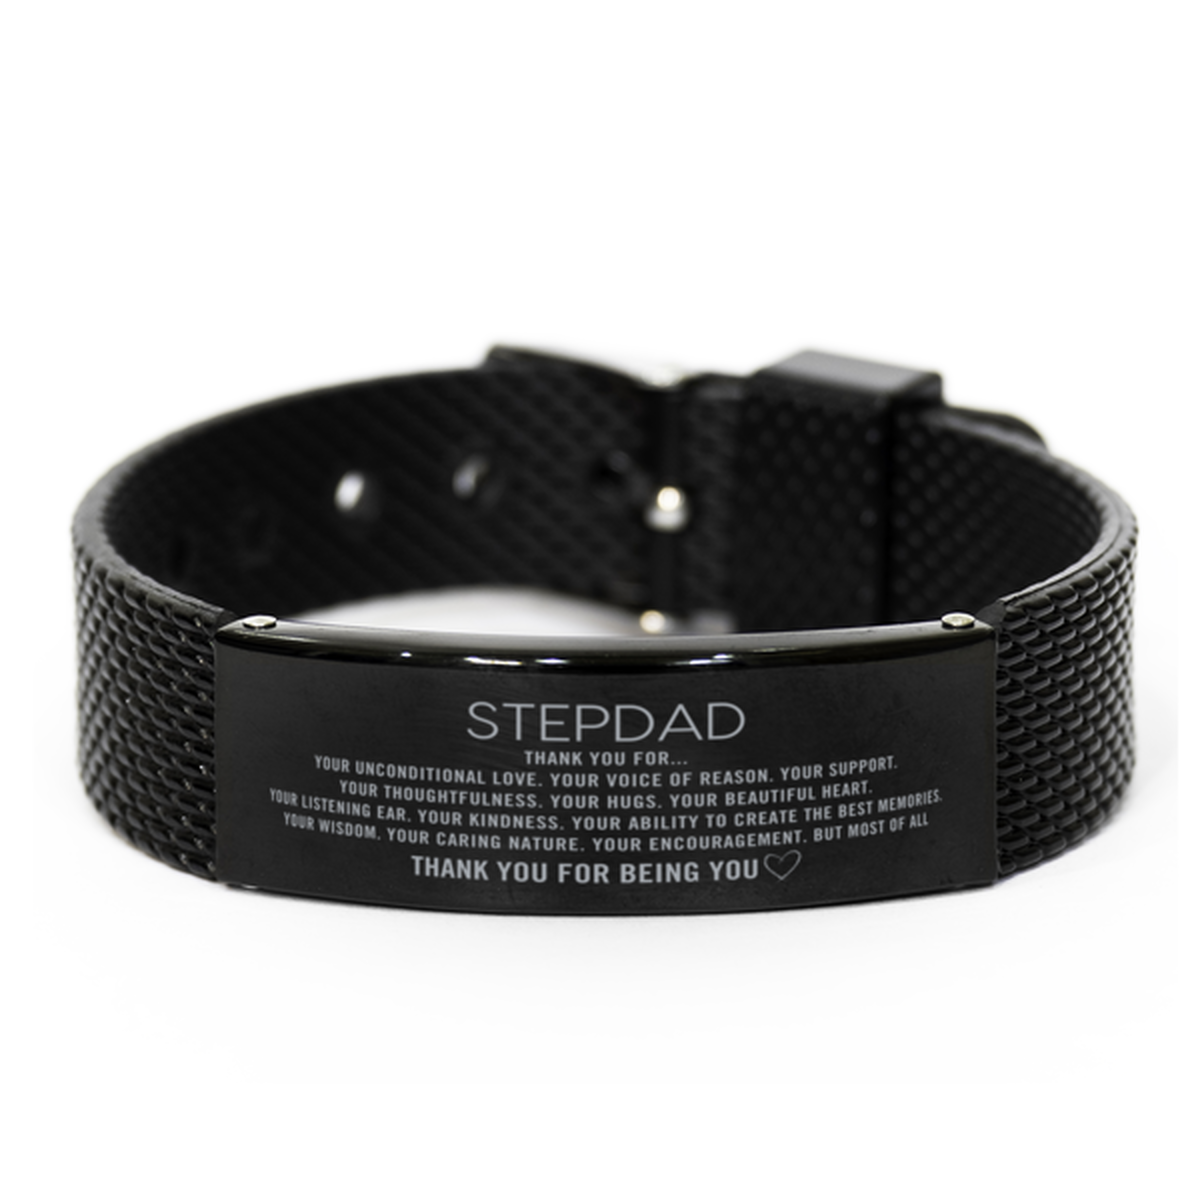 Stepdad Black Shark Mesh Bracelet Custom, Engraved Gifts For Stepdad Christmas Graduation Birthday Gifts for Men Women Stepdad Thank you for Your unconditional love